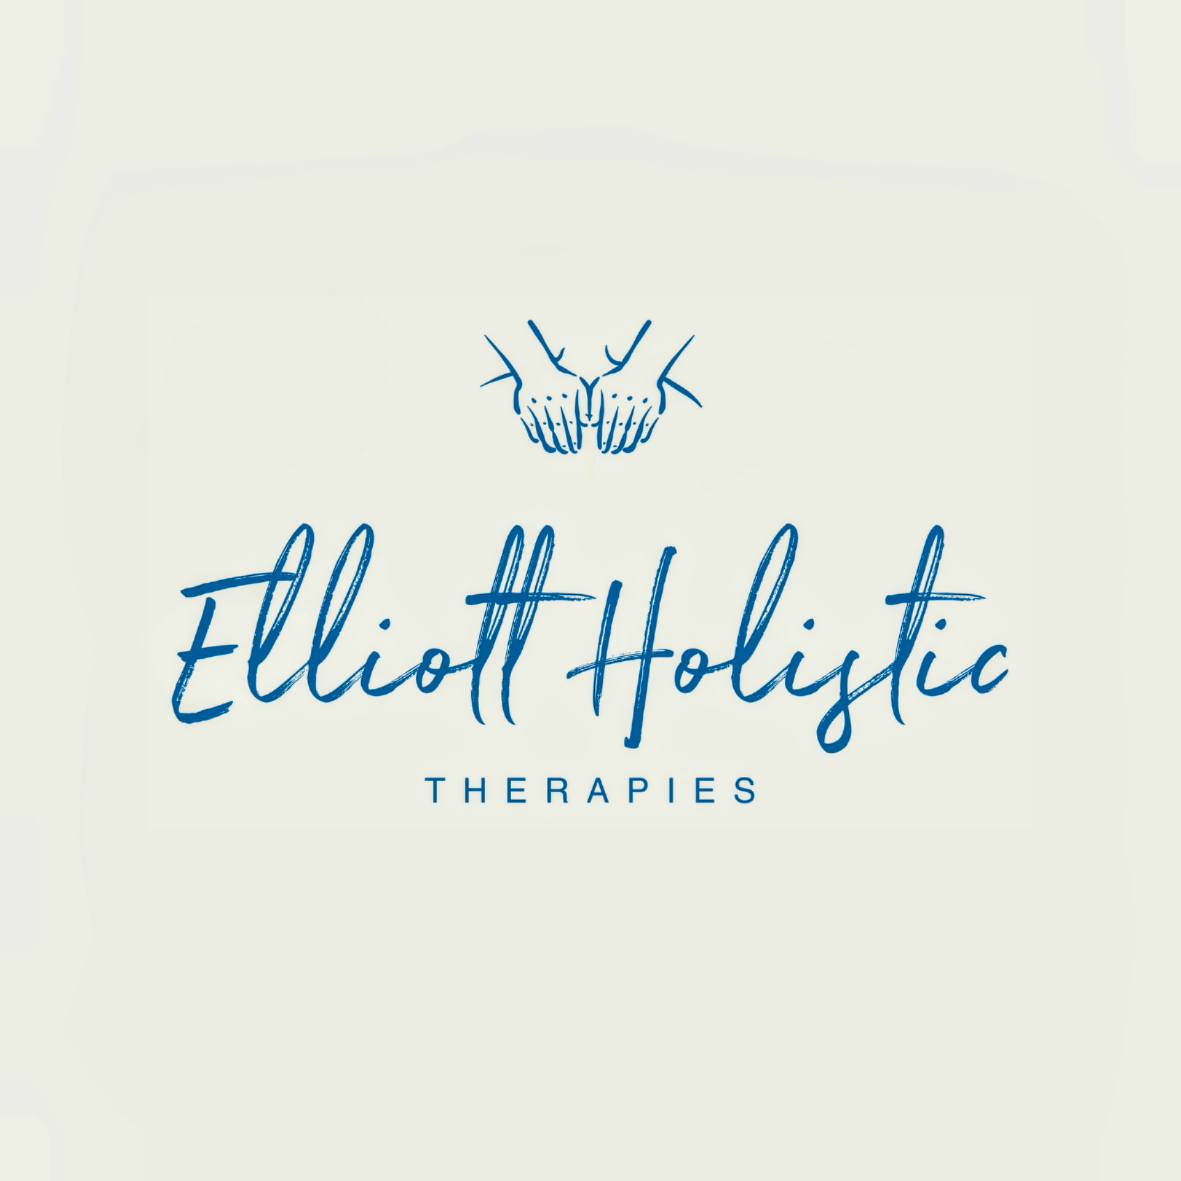 EXHIBITOR: Elliot Holistic Therapies